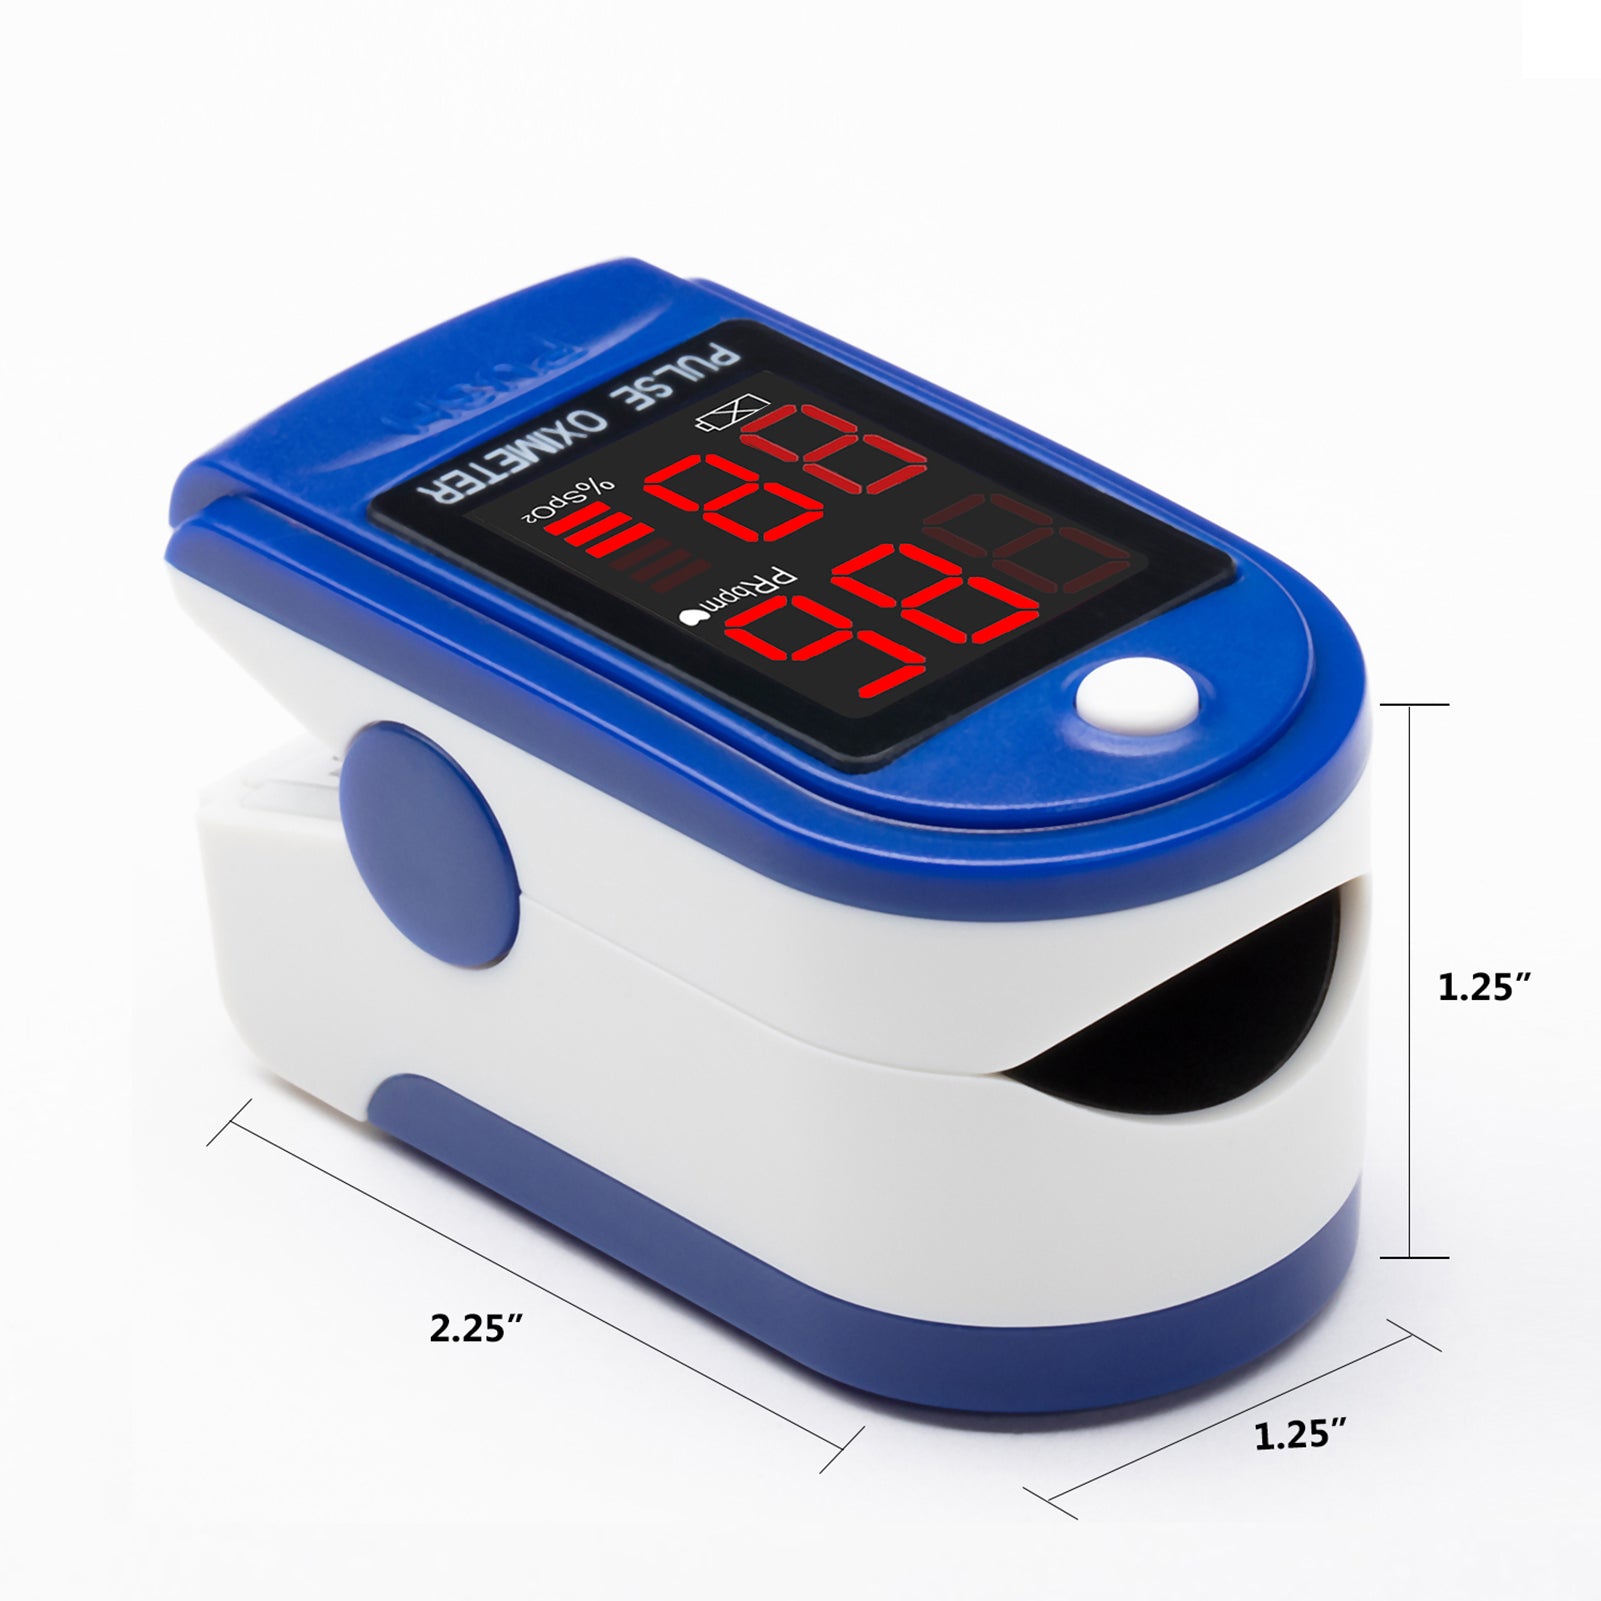 Finger Pulse Oximeter Clinical Guard 50DL Image 3 - Dimensions